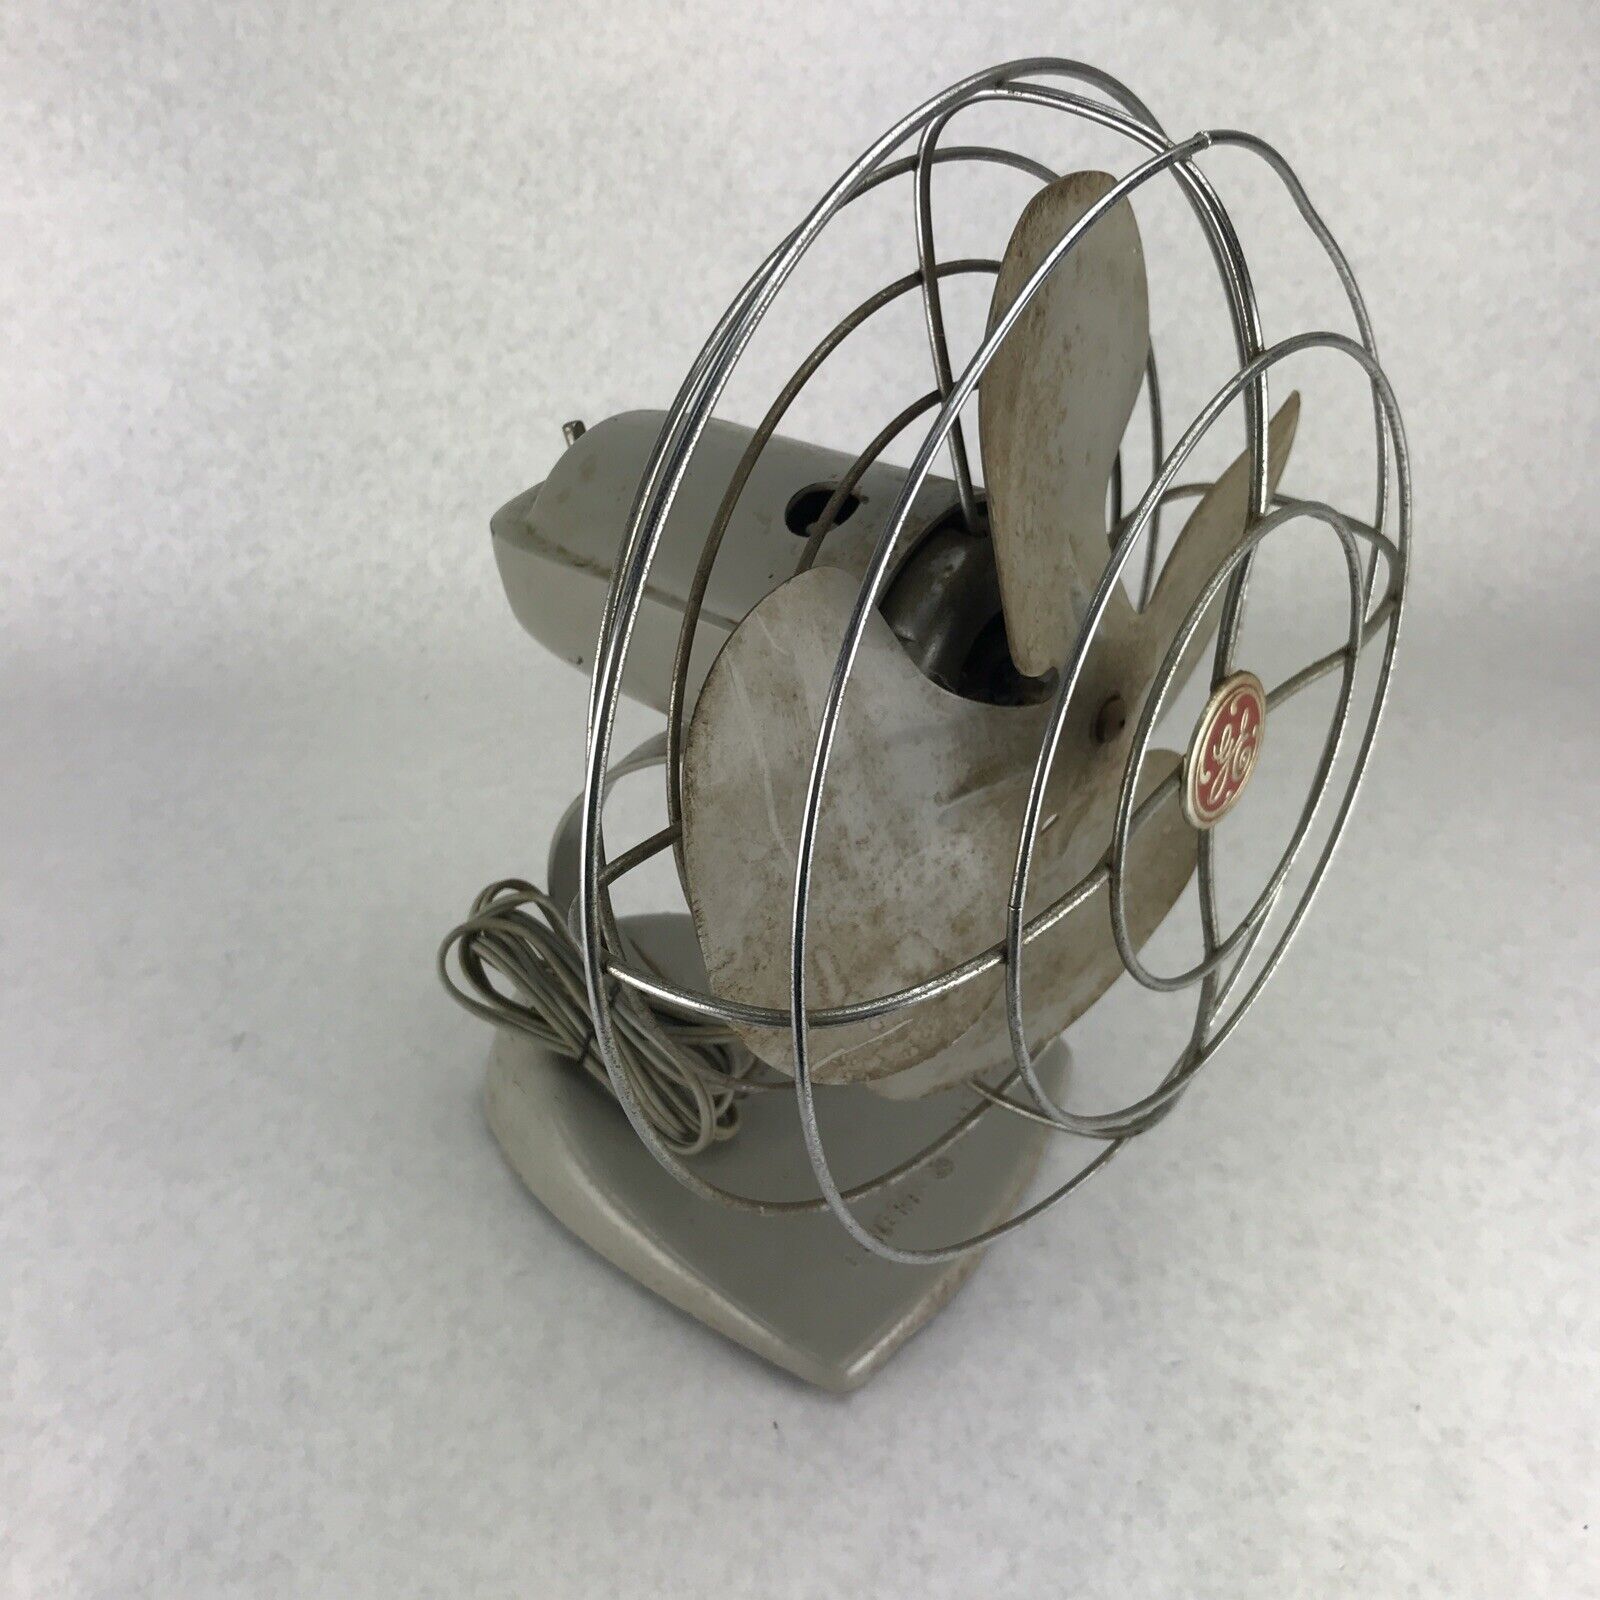 GE General Electric Oscillating Fan F11S107 Grey Vintage 1950